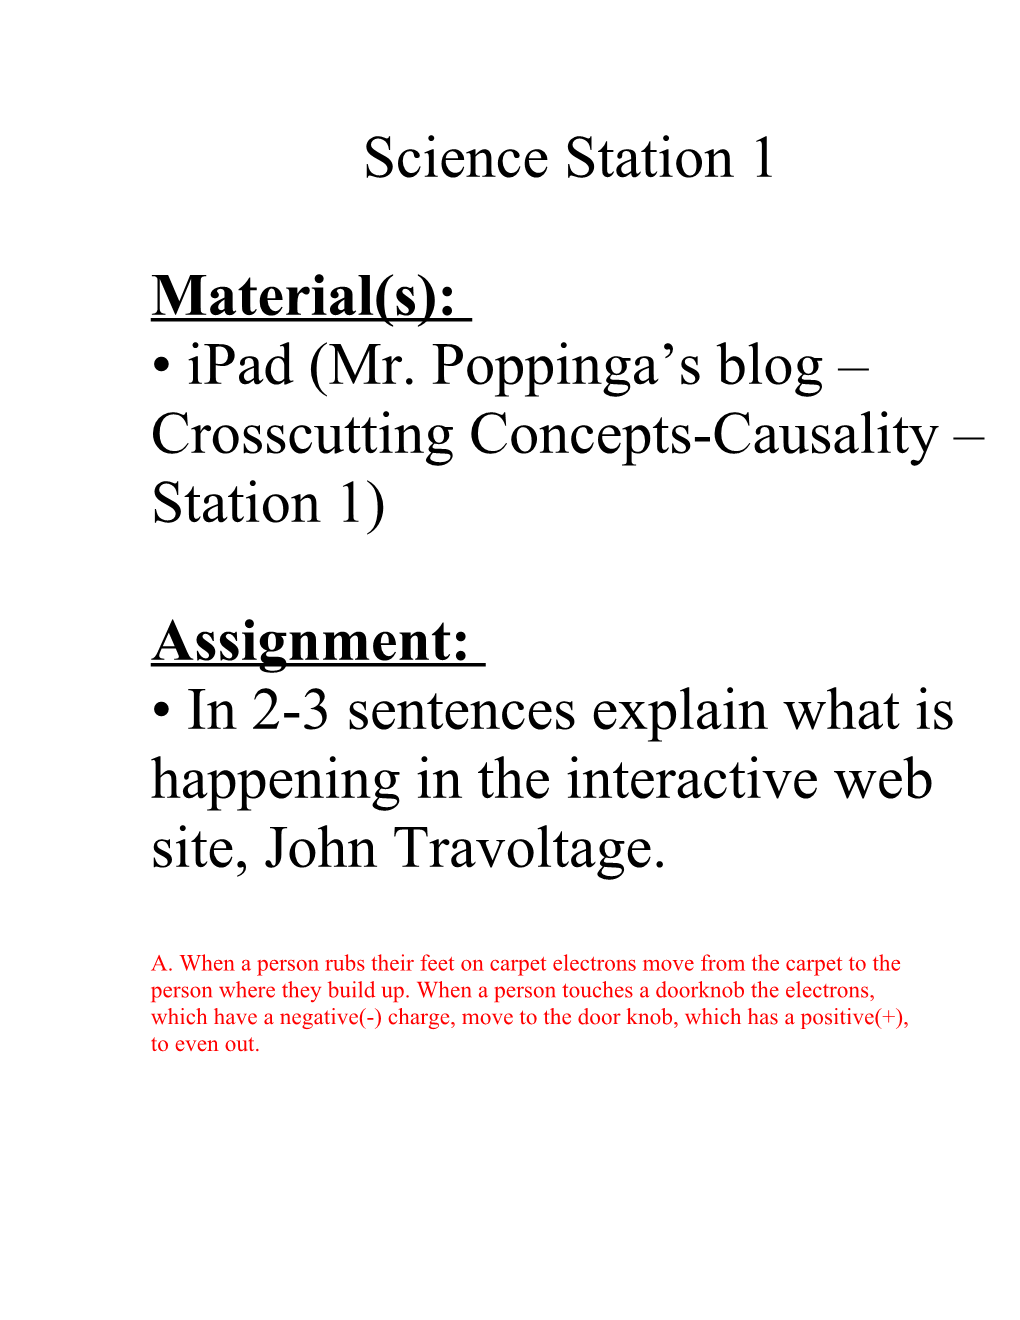 Ipad (Mr. Poppinga S Blog Crosscutting Concepts-Causality Station 1)